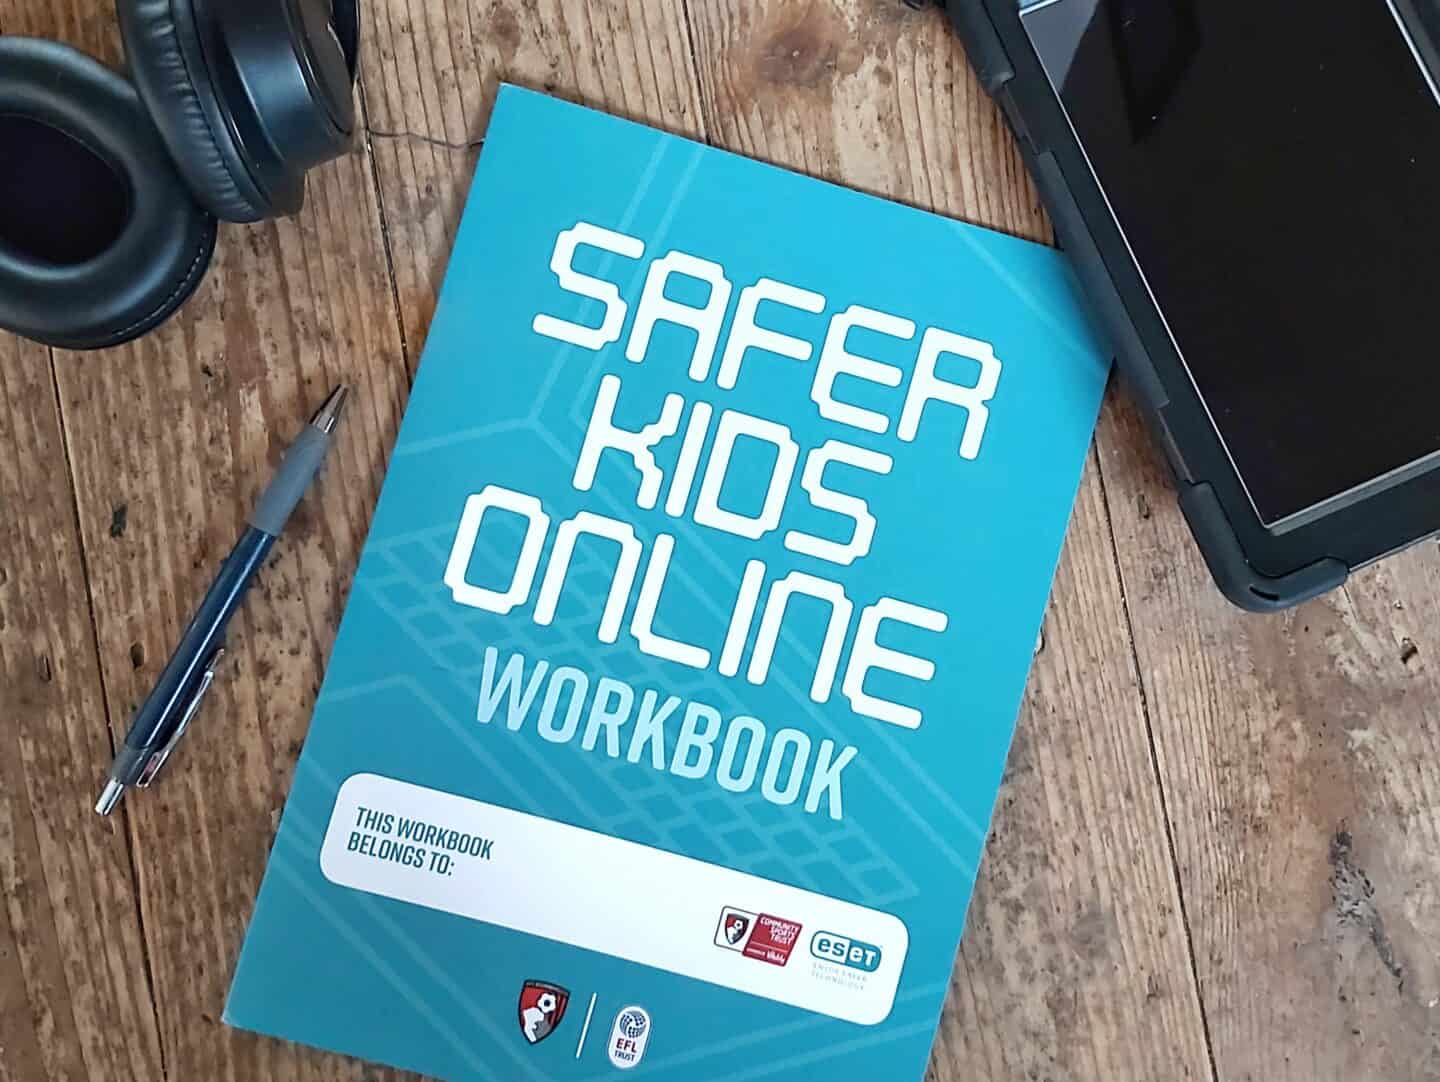 ESET Safer kids online workbook on wooden background with tablet, headphones and phone beside